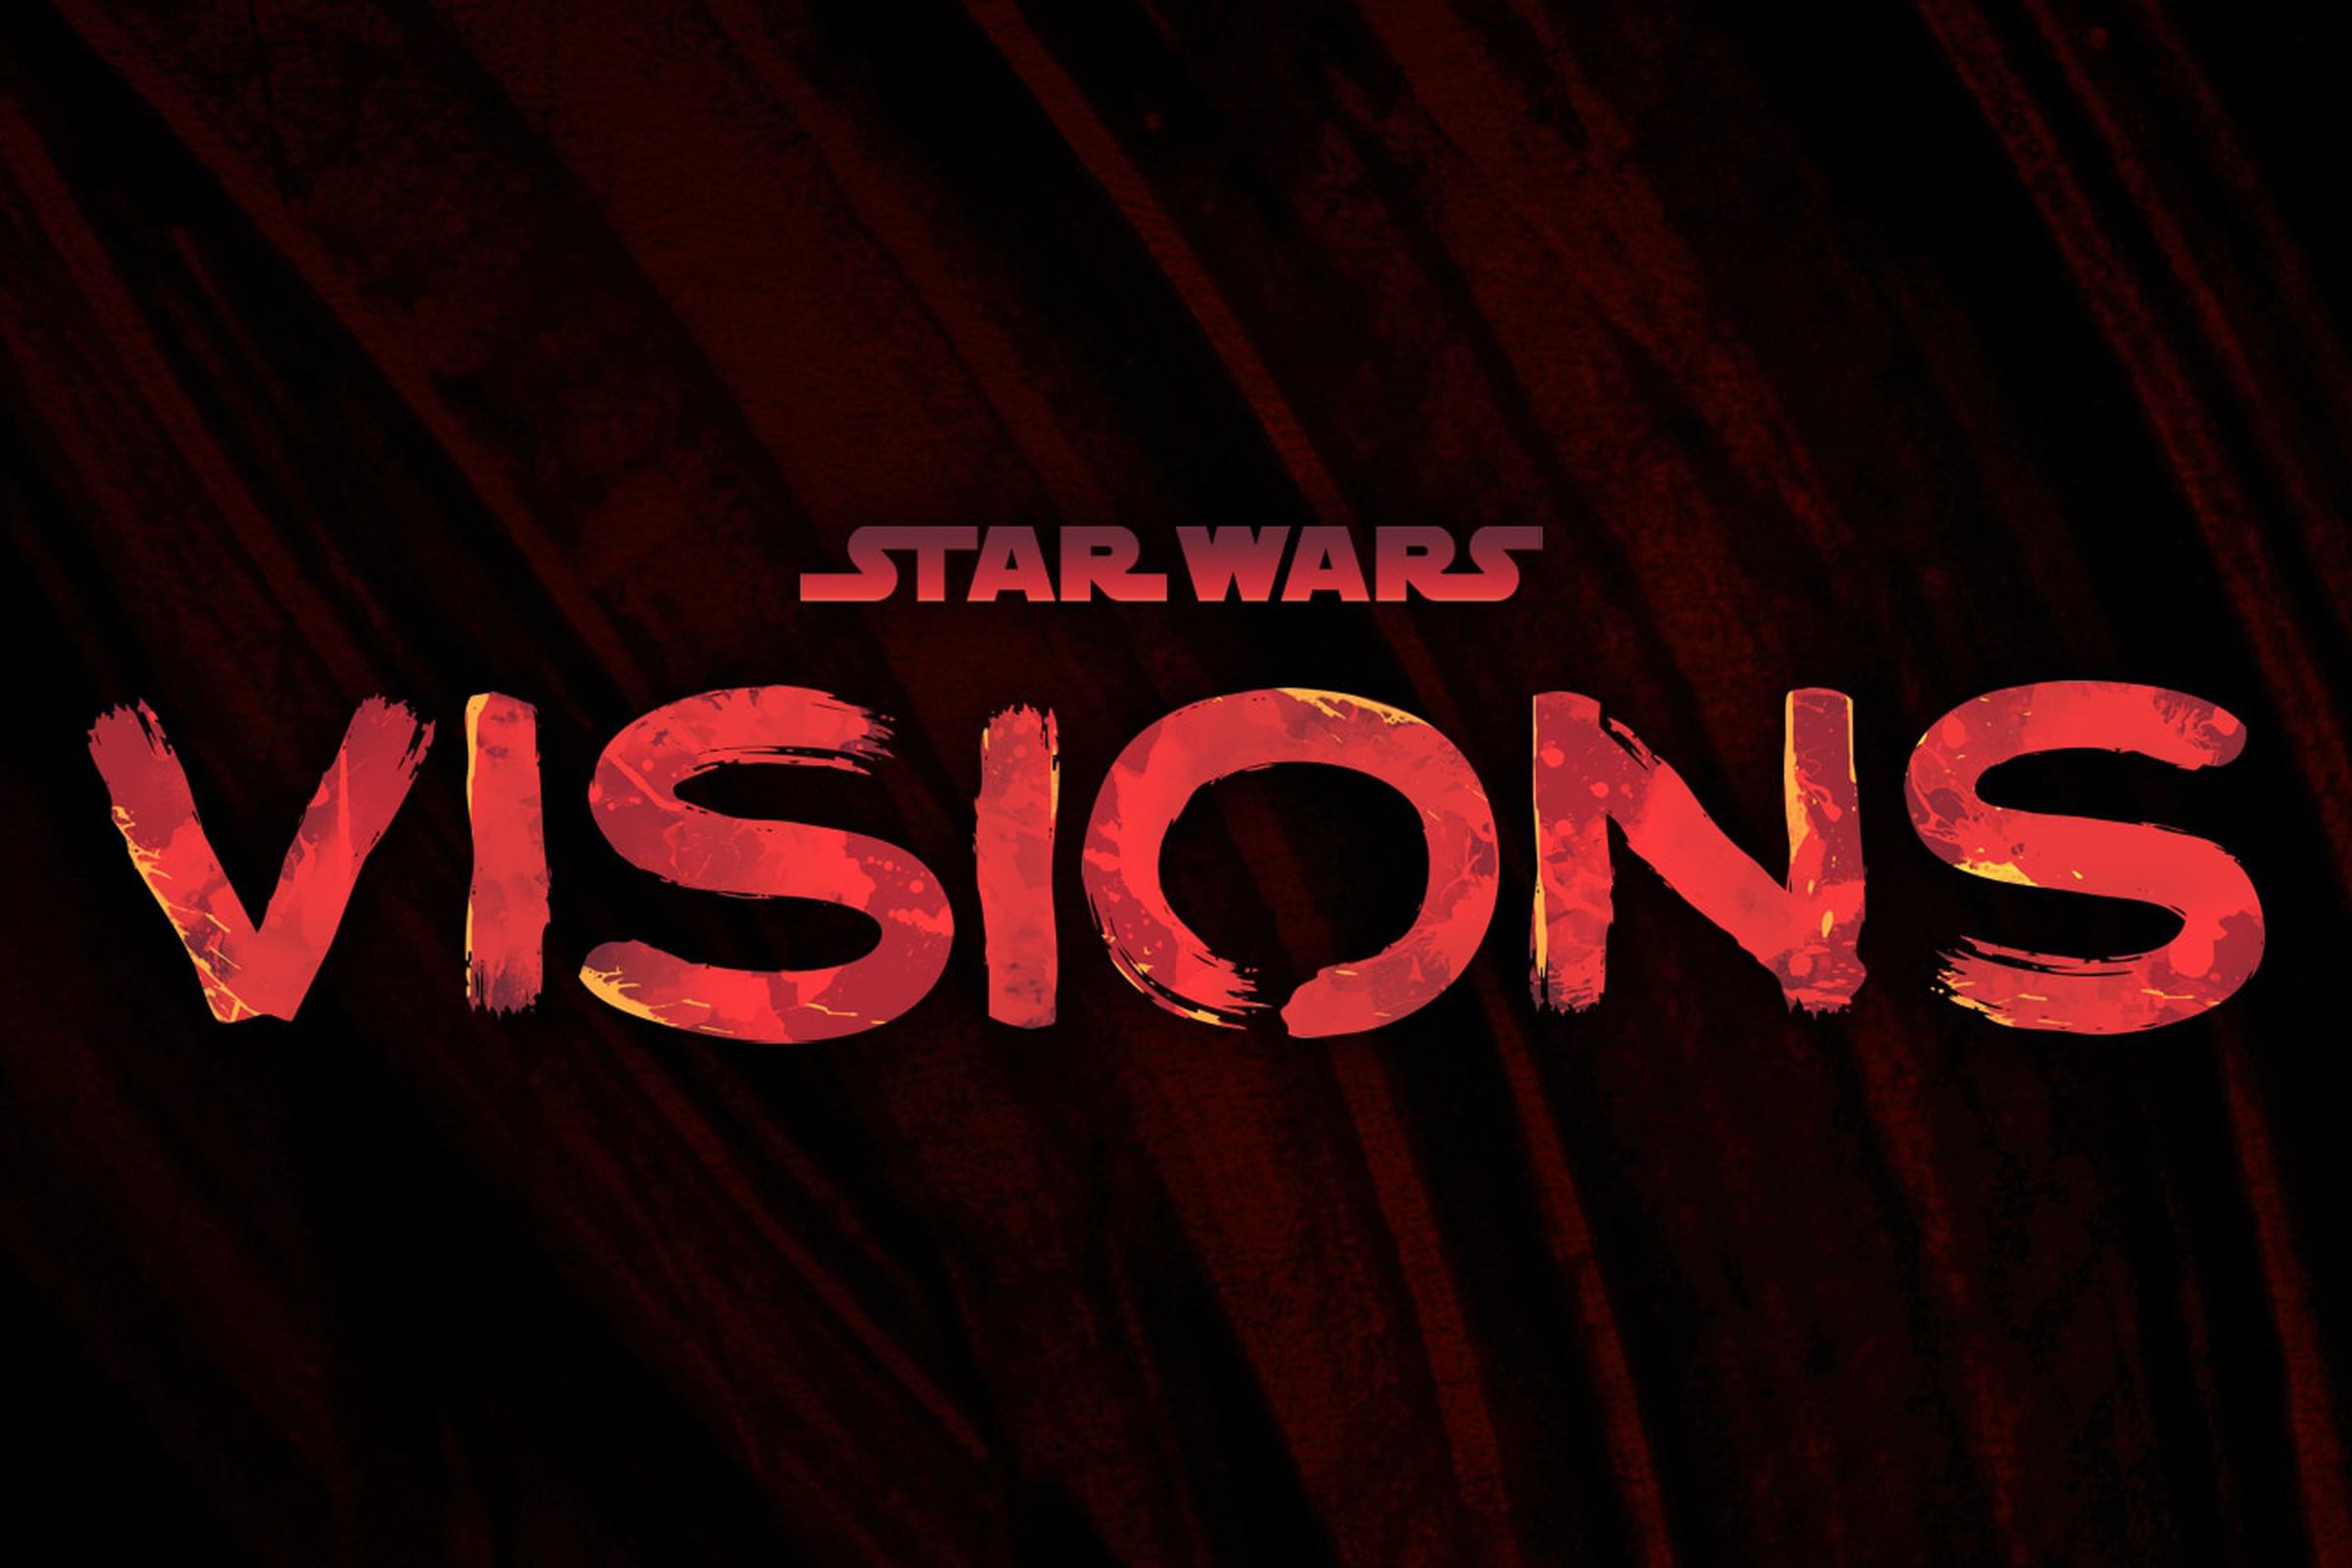 The Star Wars: Visions logo.